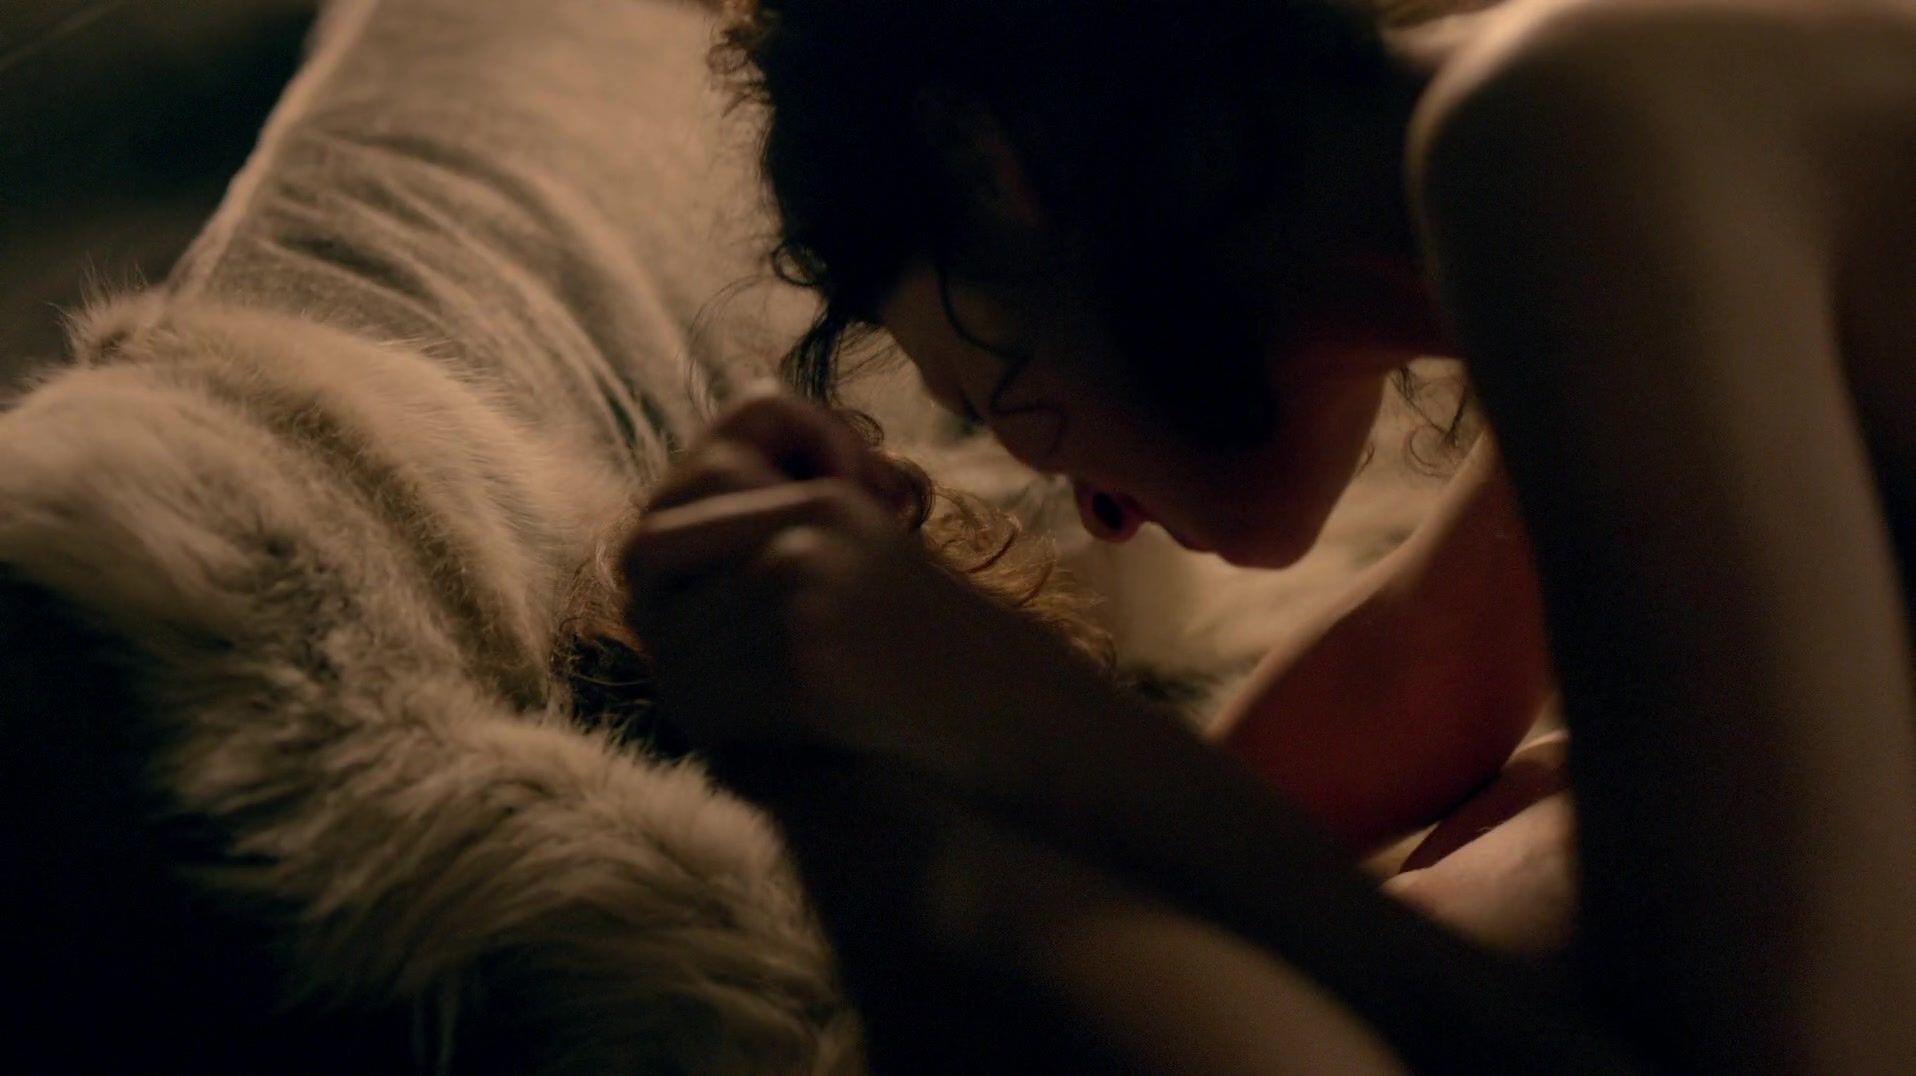 Thuylinh Sex scene of naked Caitriona Balfe | TV show "Outlander" Adultcomics - 1